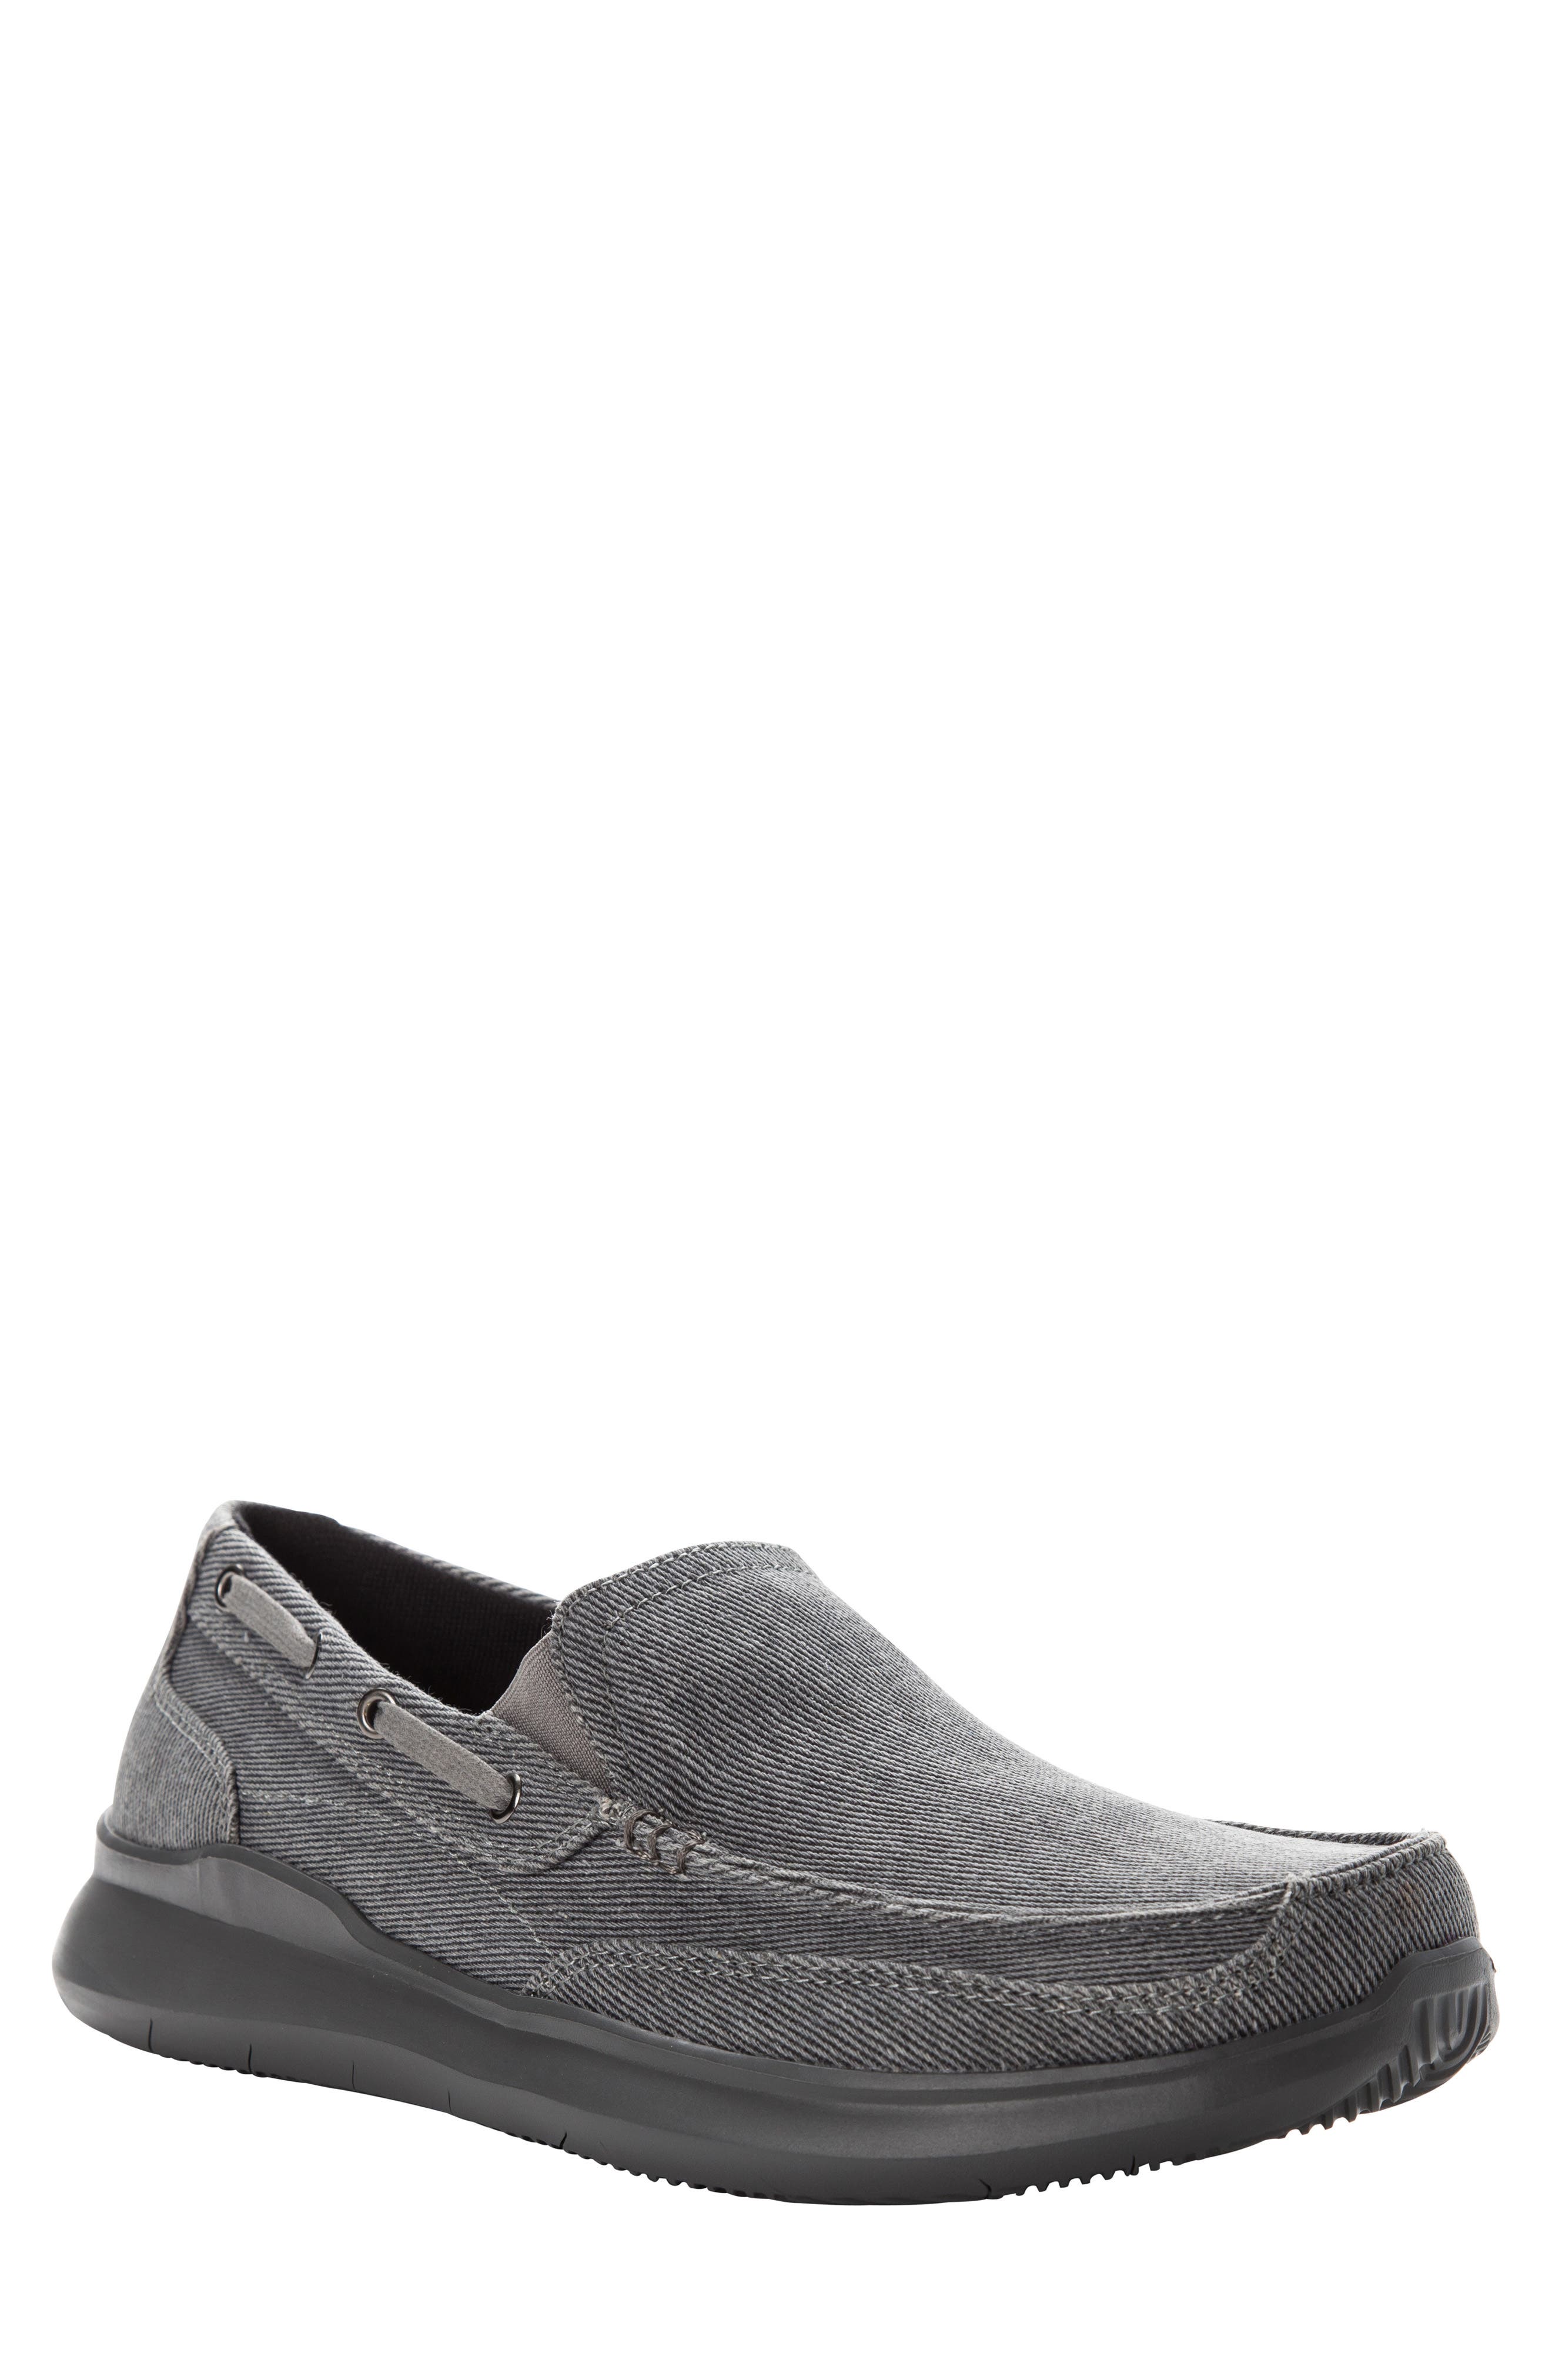 Propet Grisham MDX002S Casual Shoe Slate NEW Men's Size 12 X 3E 